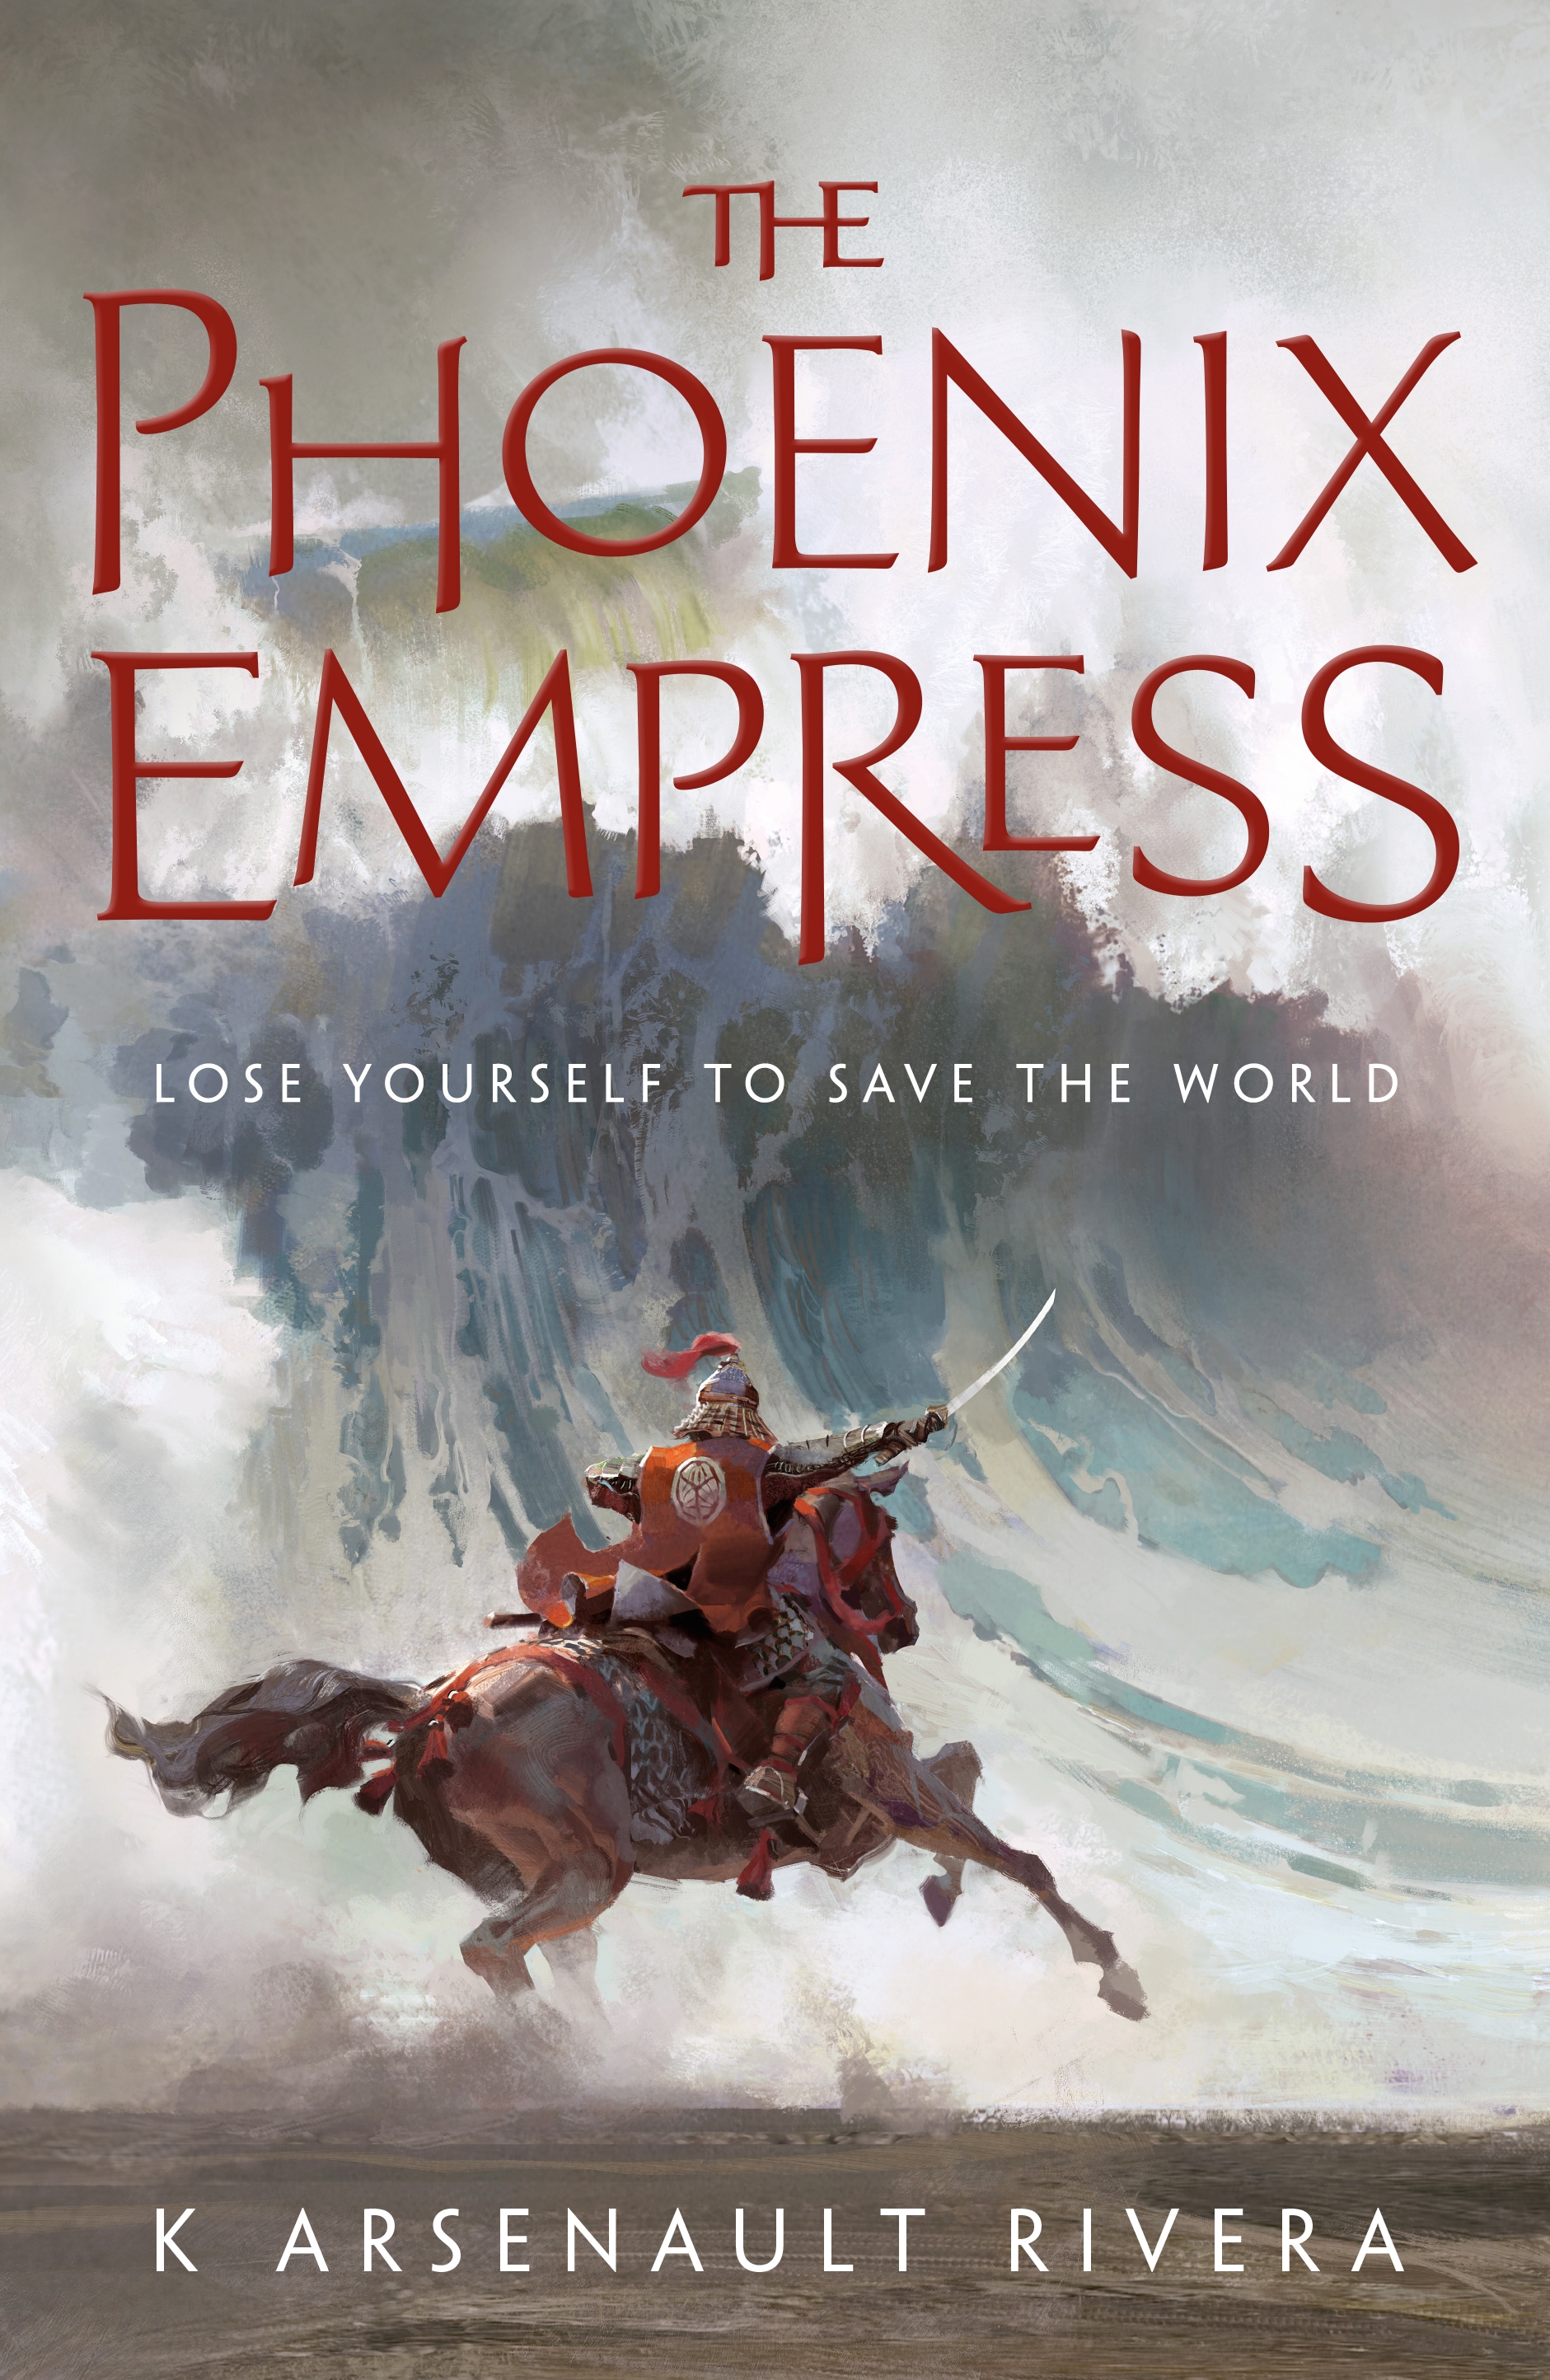 The Phoenix Empress by K Arsenault Rivera